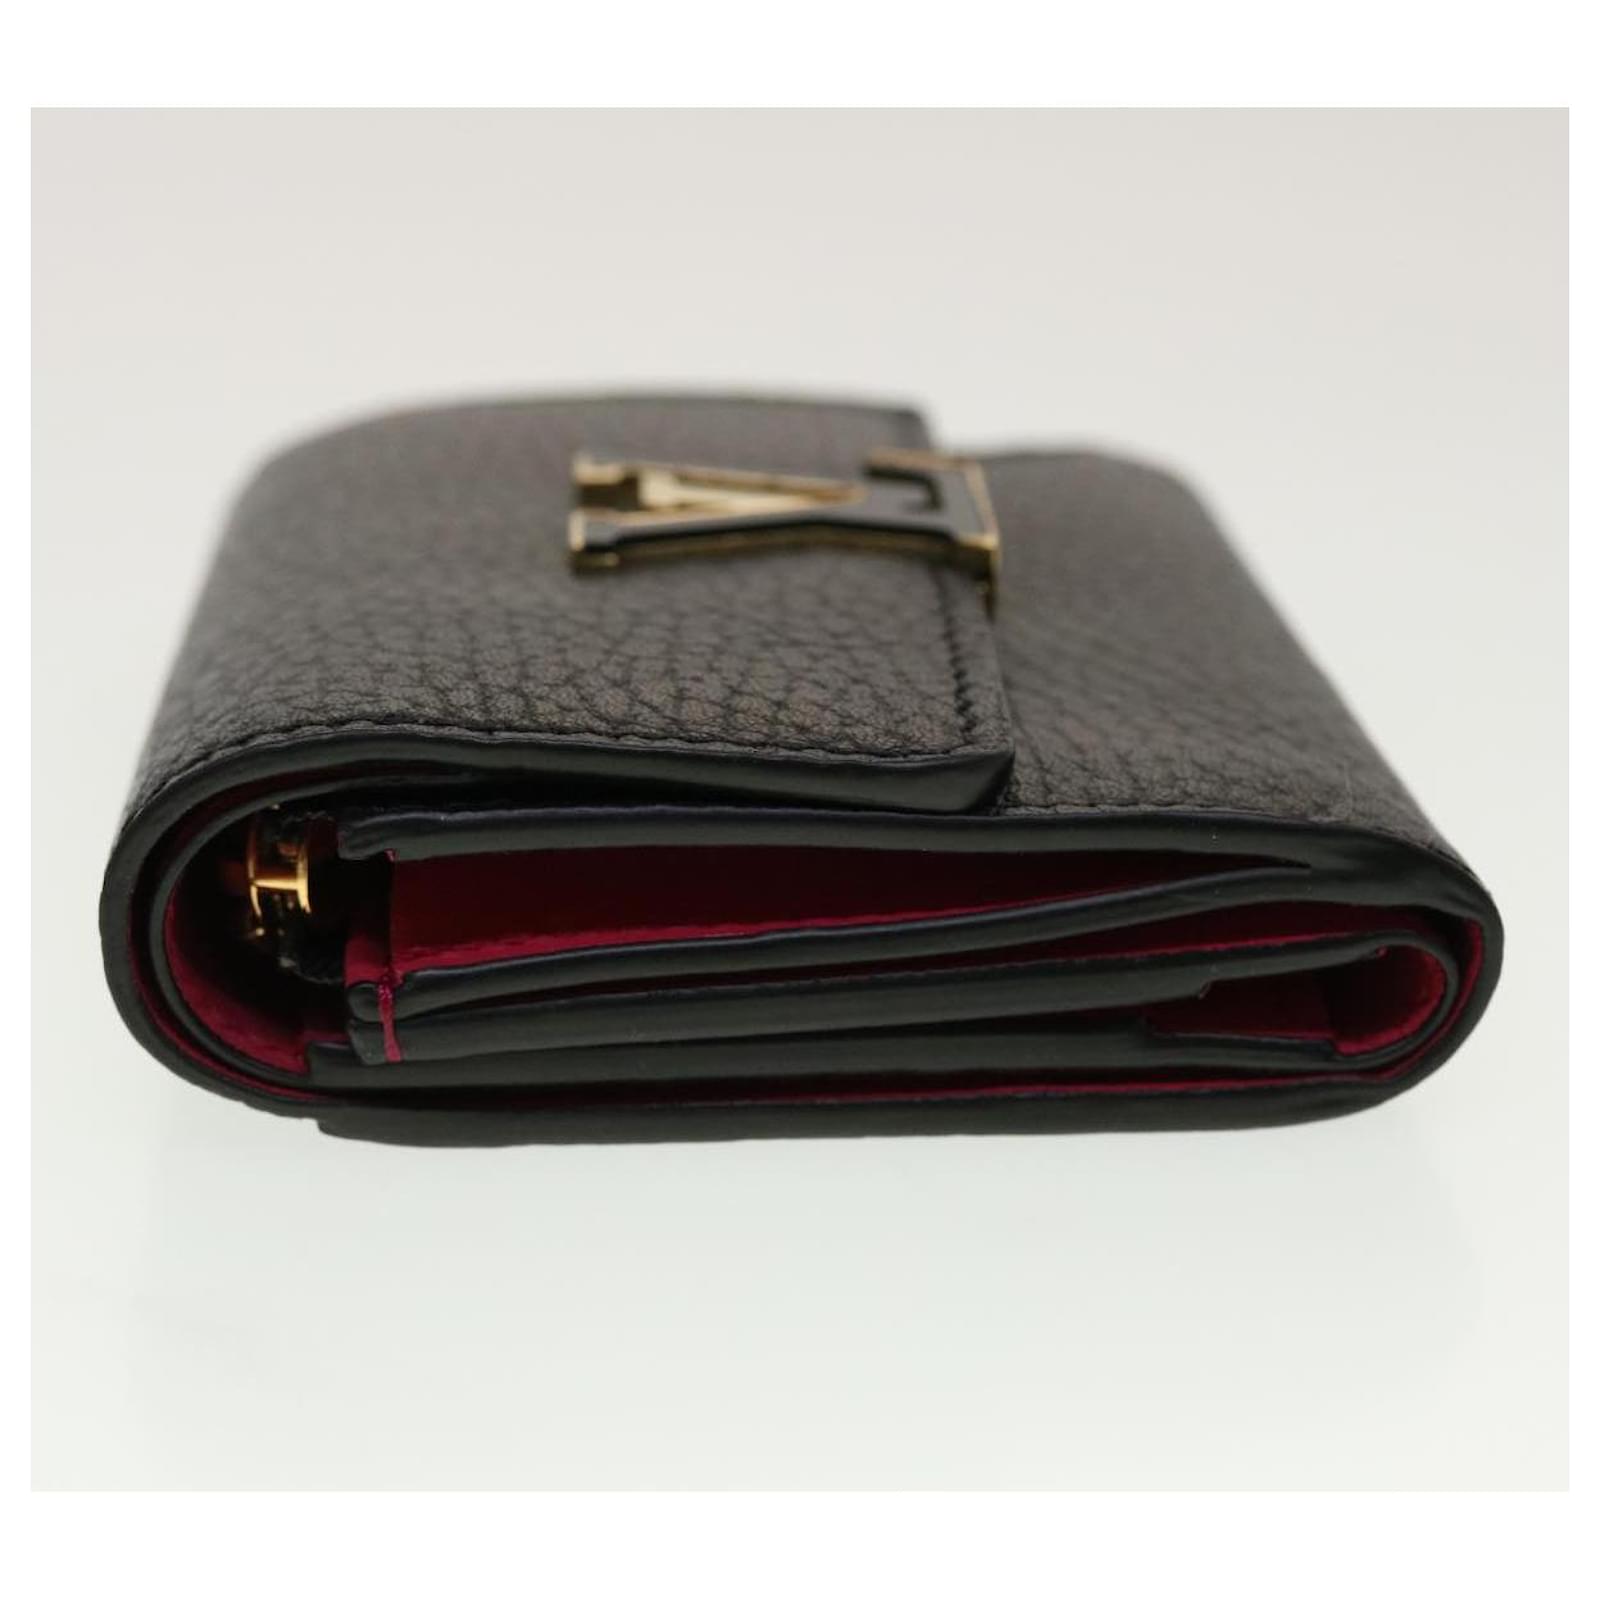 LOUIS VUITTON Capucines Compact Wallet Taurillon Leather Black Hot